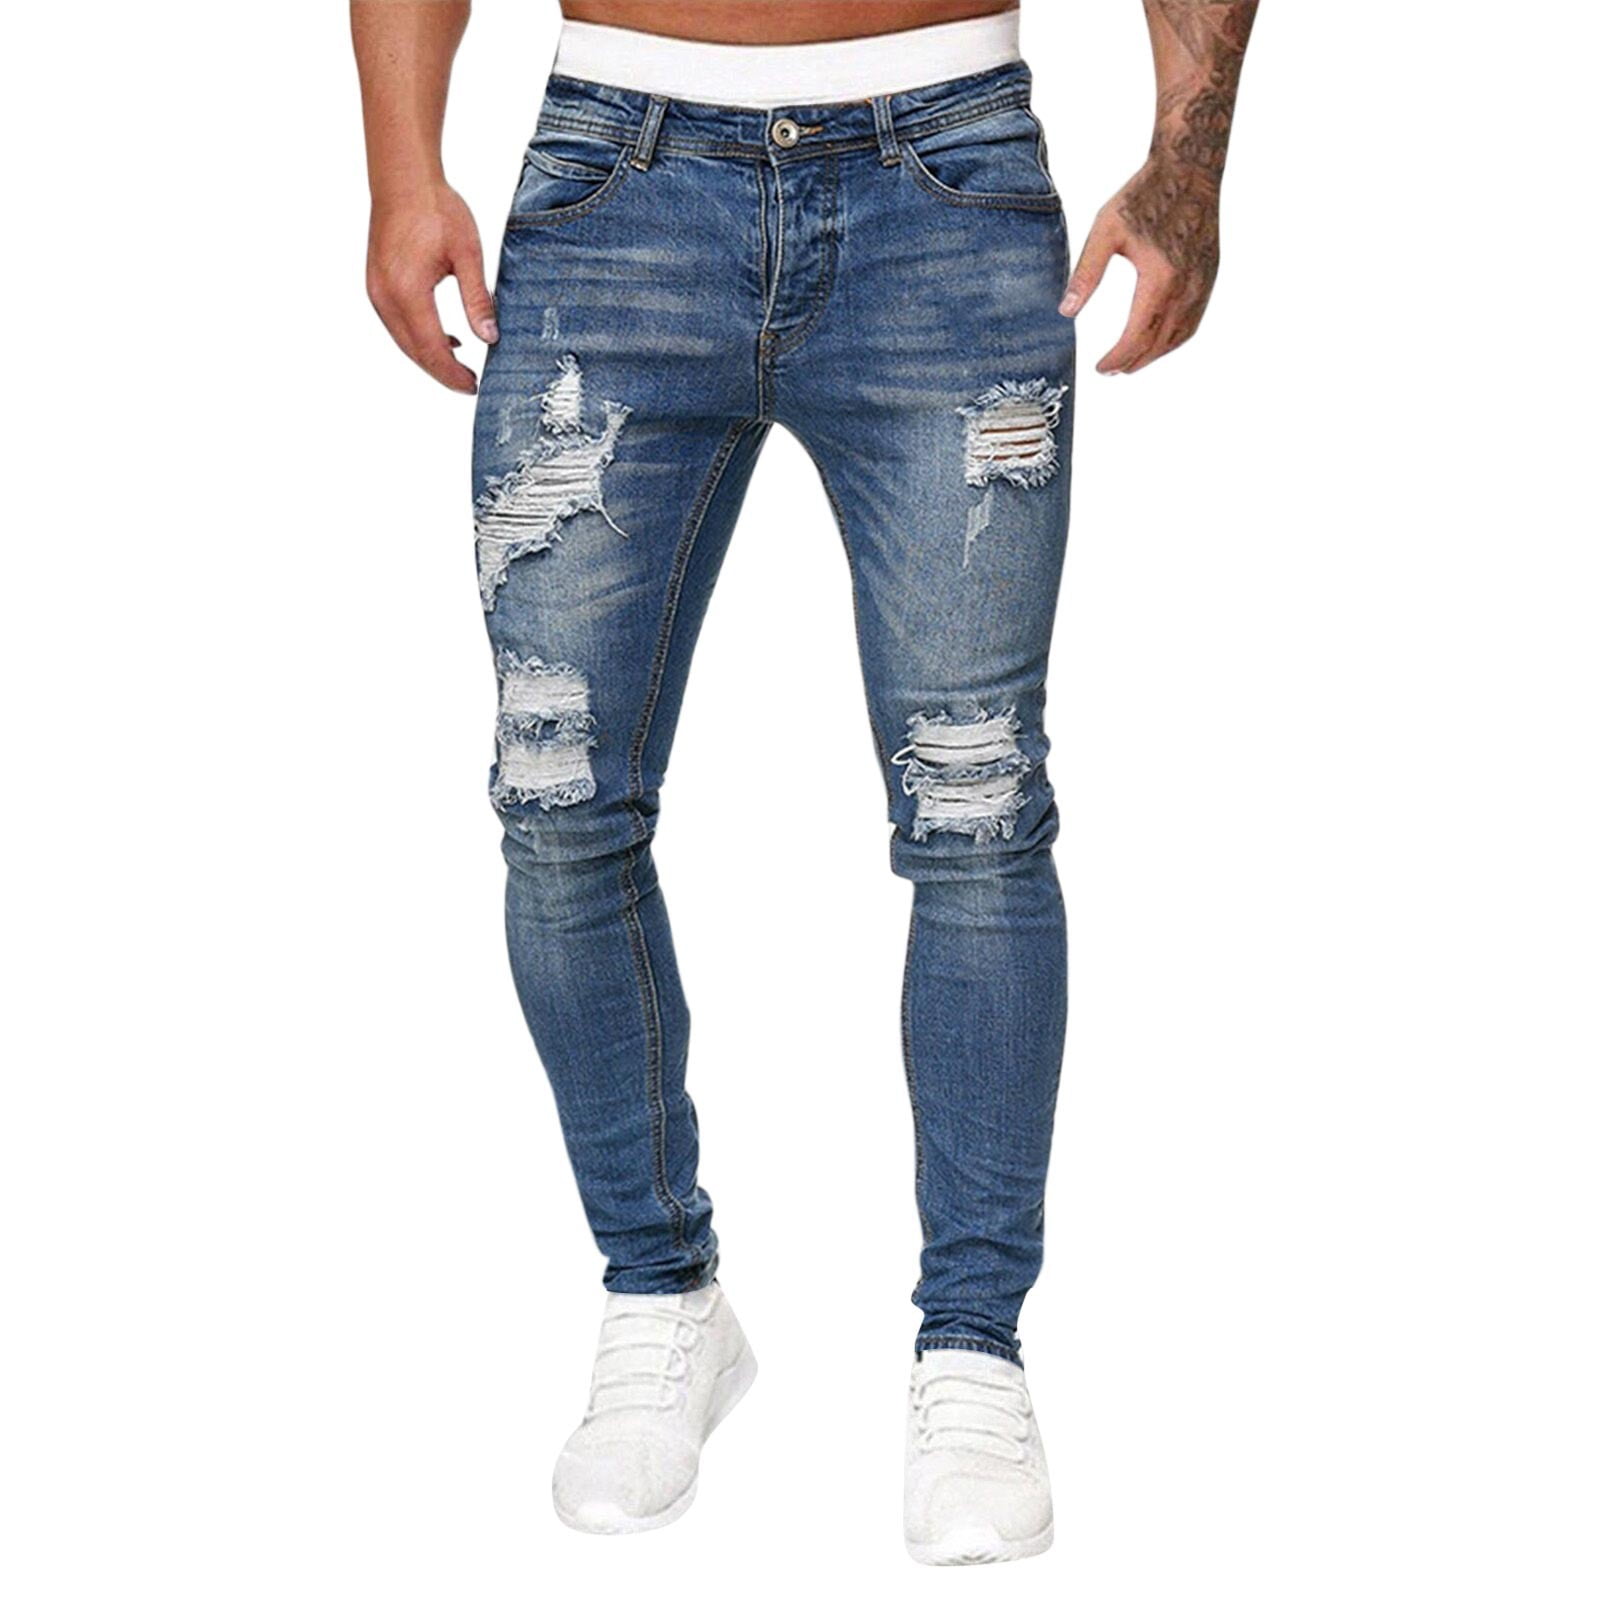 KaLI_store Jeans for Men Mens Classic Slim Fit Stretch Jeans for Men ...